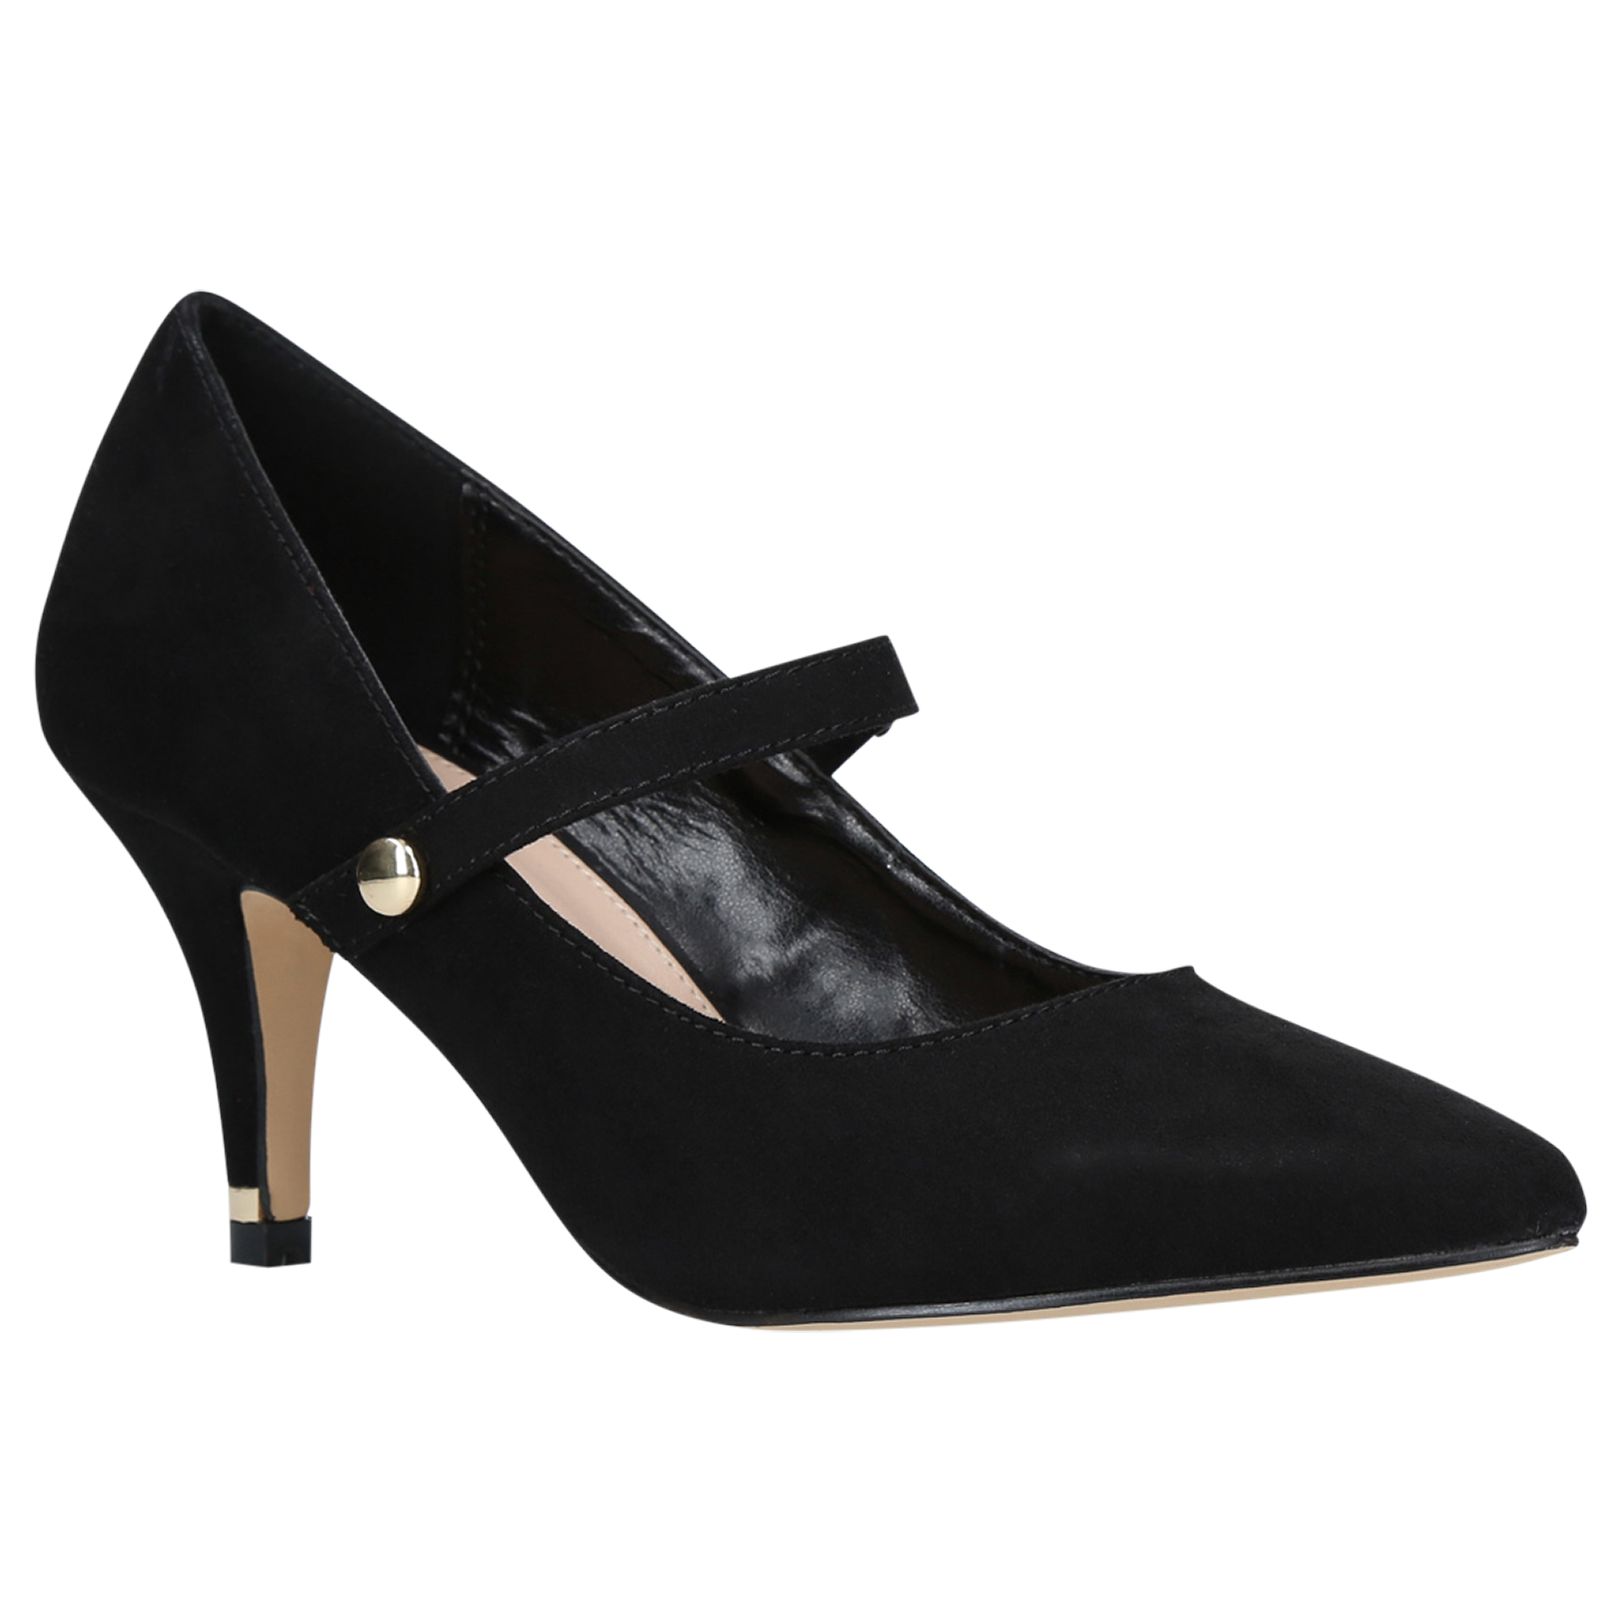 Carvela Kream Court Shoes, Black, 2